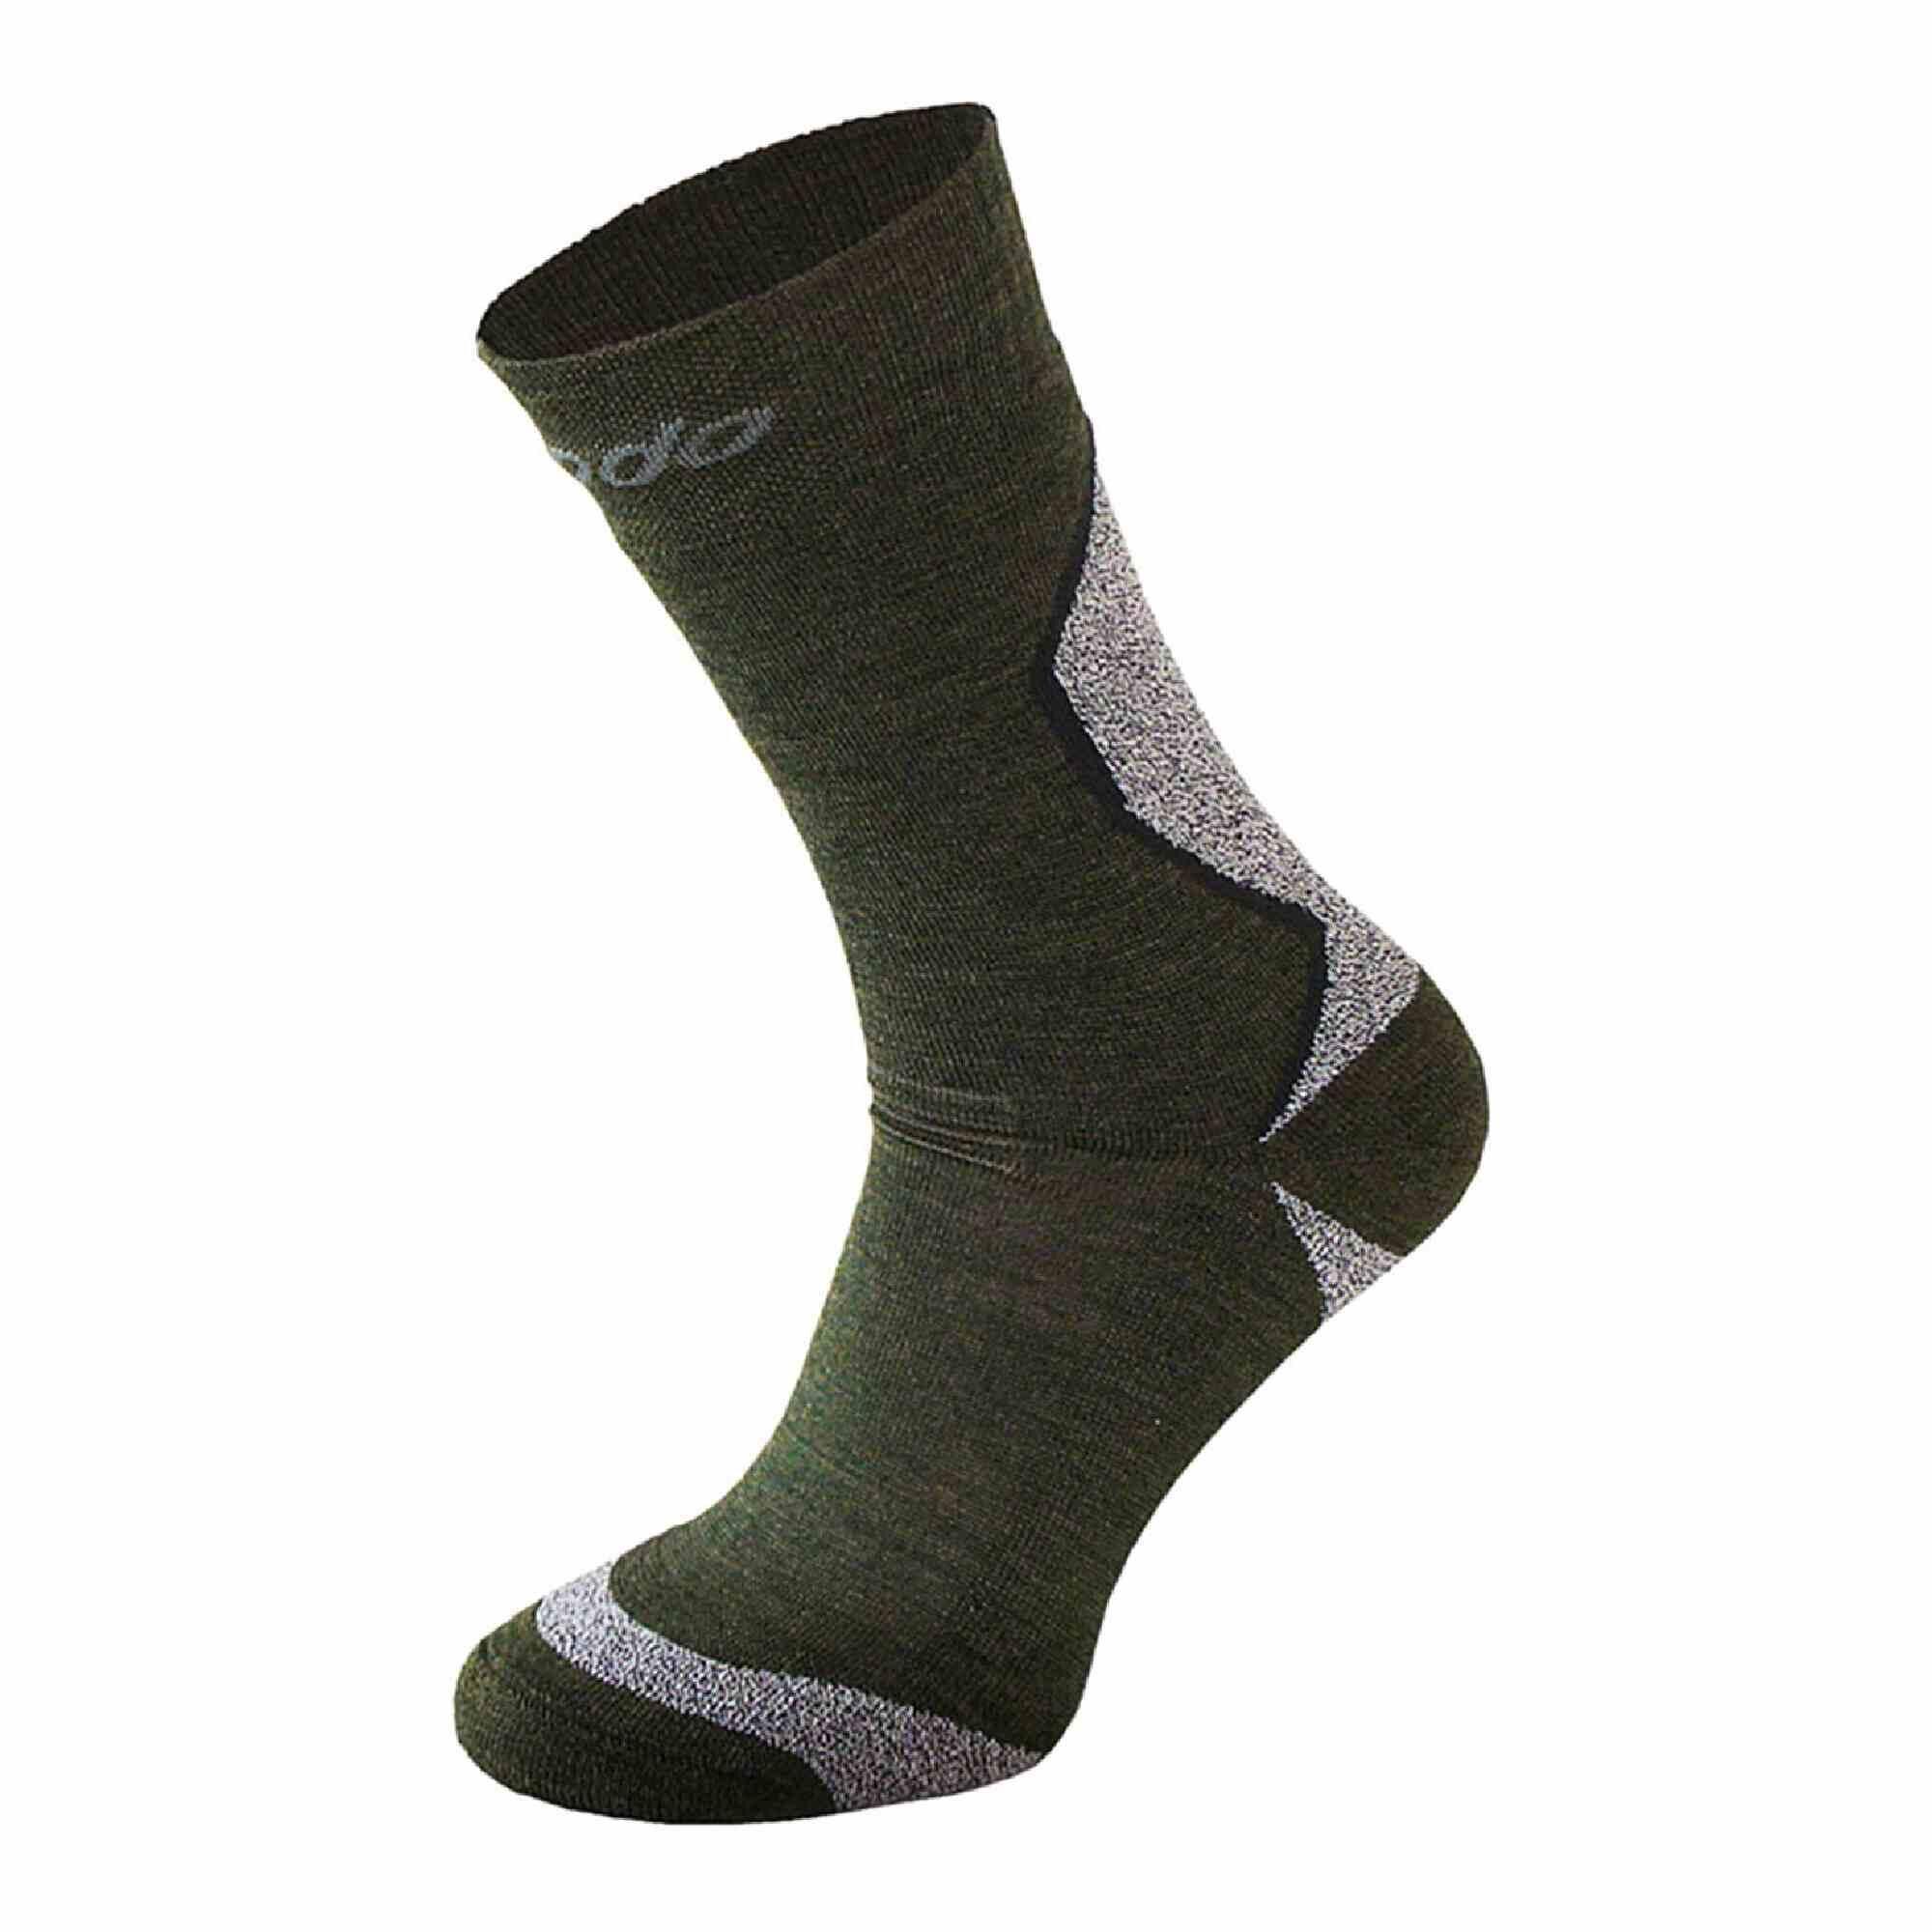 Walking Socks - Merino Wool Hiking Socks